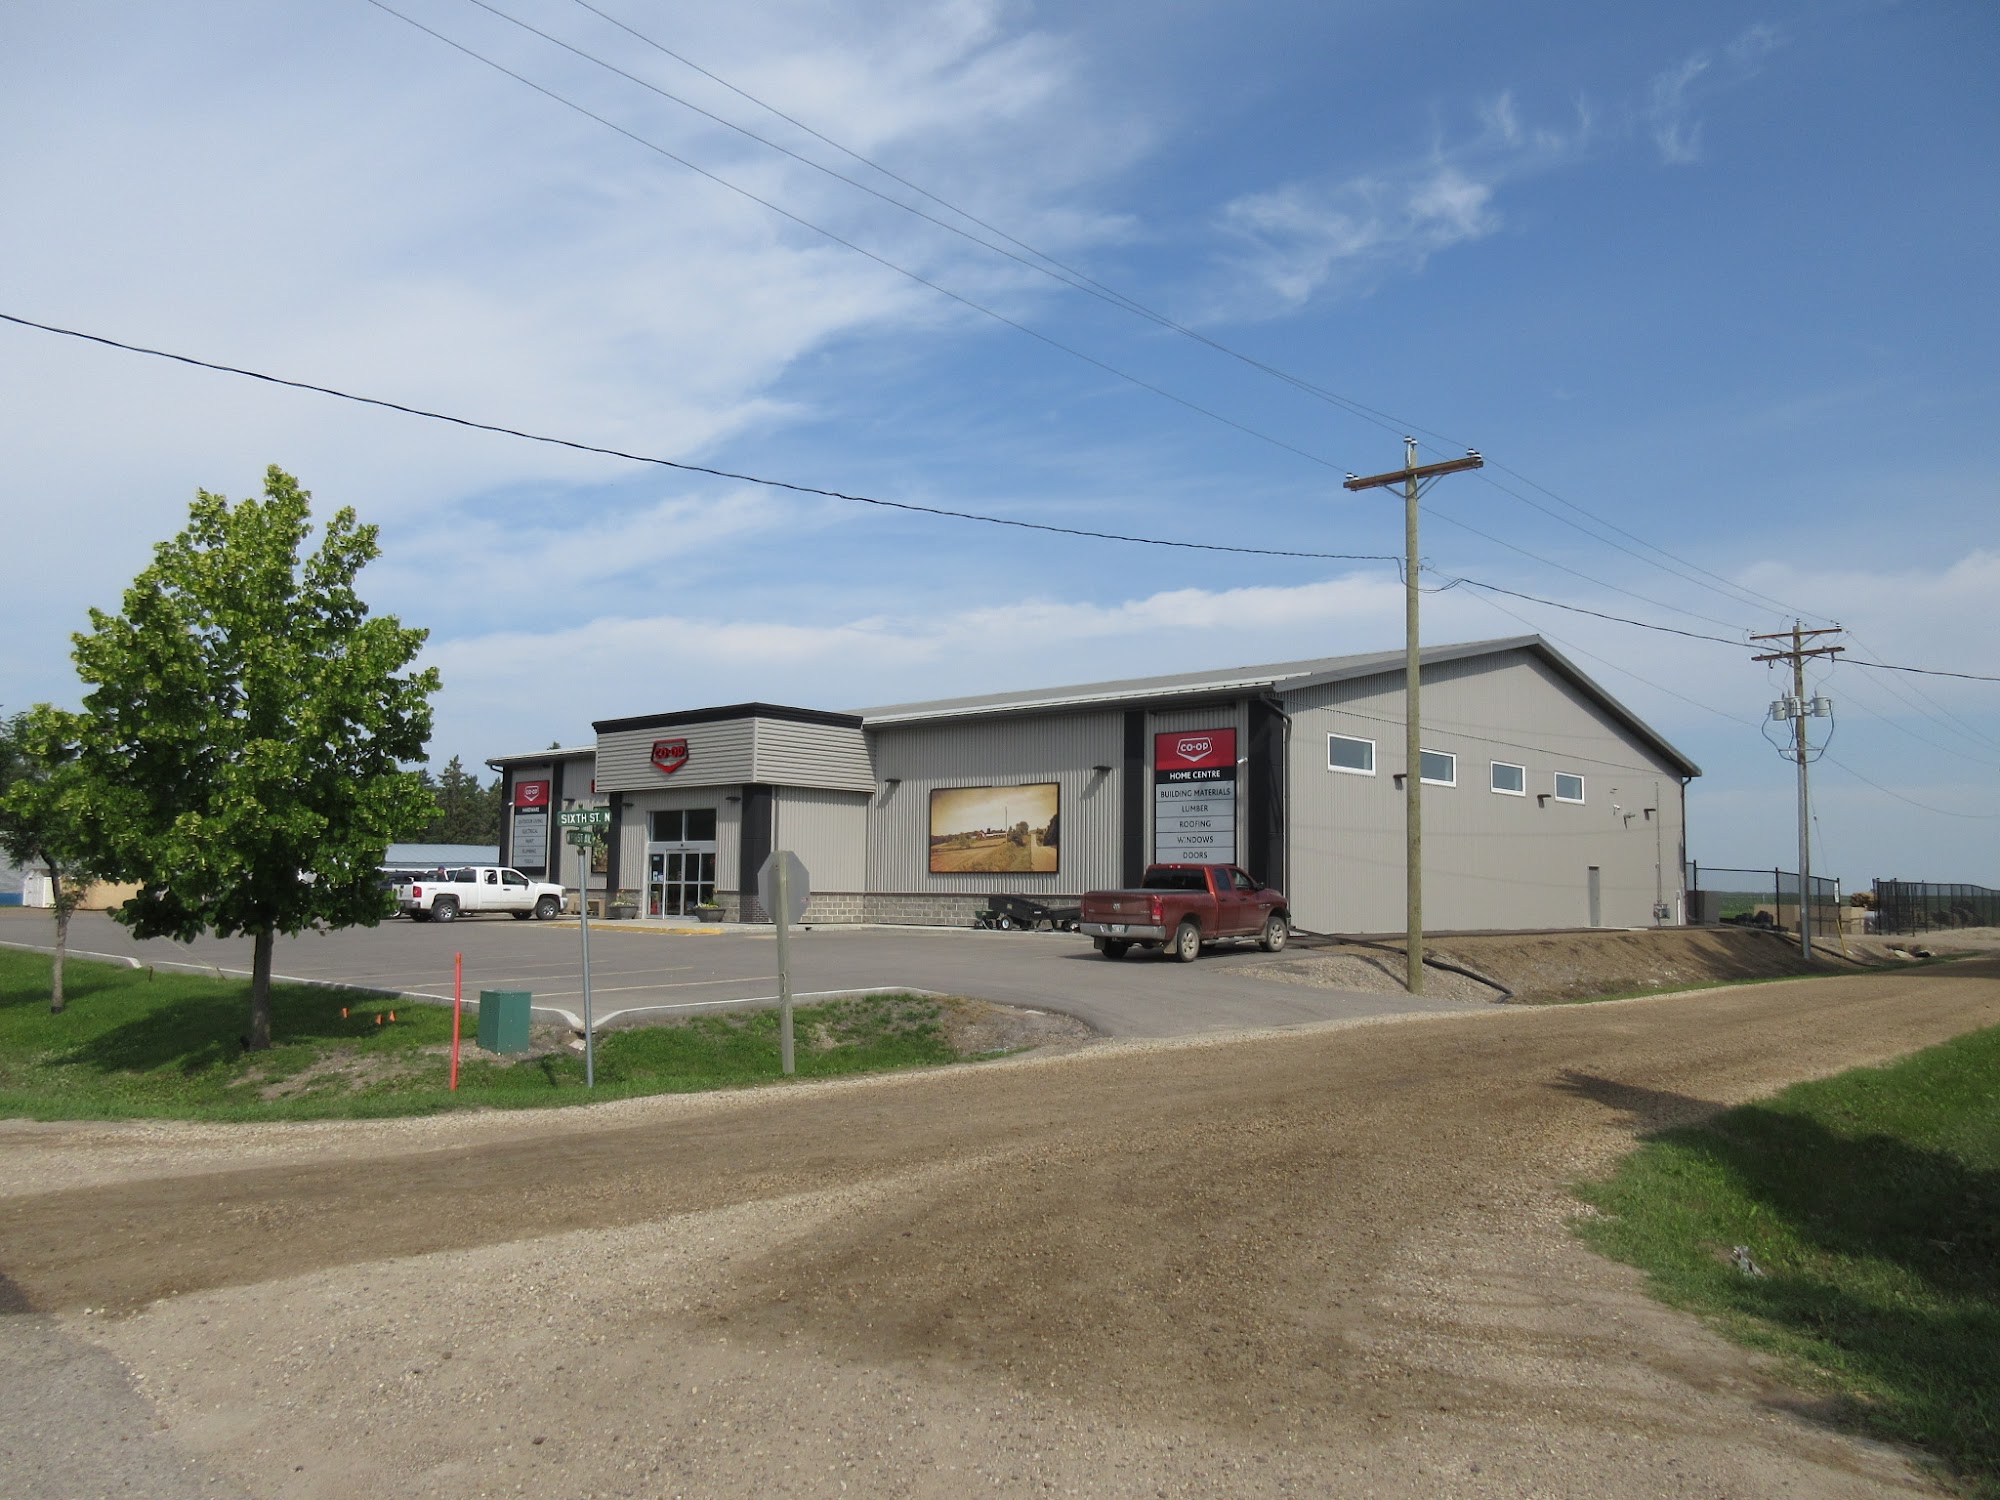 Pembina Co-op Home Centre - Souris 219 First Ave W, Souris Manitoba R0K 2C0